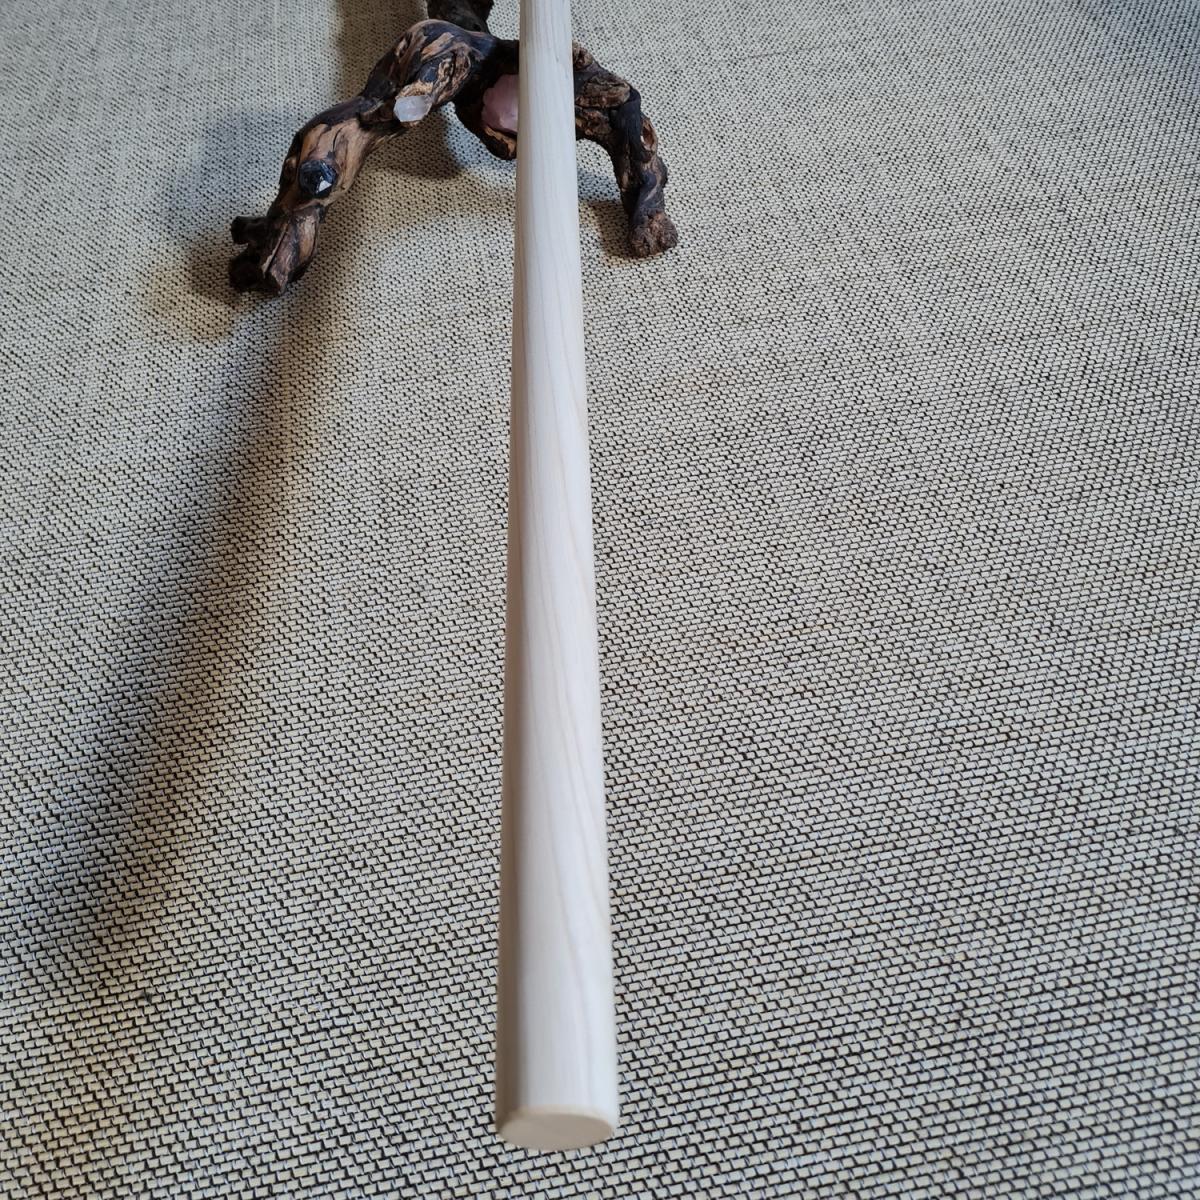 Bo stick made of ash wood - 250 cm order now »www.bokken-shop.de suitable for Aikido, Iaido, Kobudō, Bujinkan, Koryu, Jodo✓ Your Budo specialist dealer!